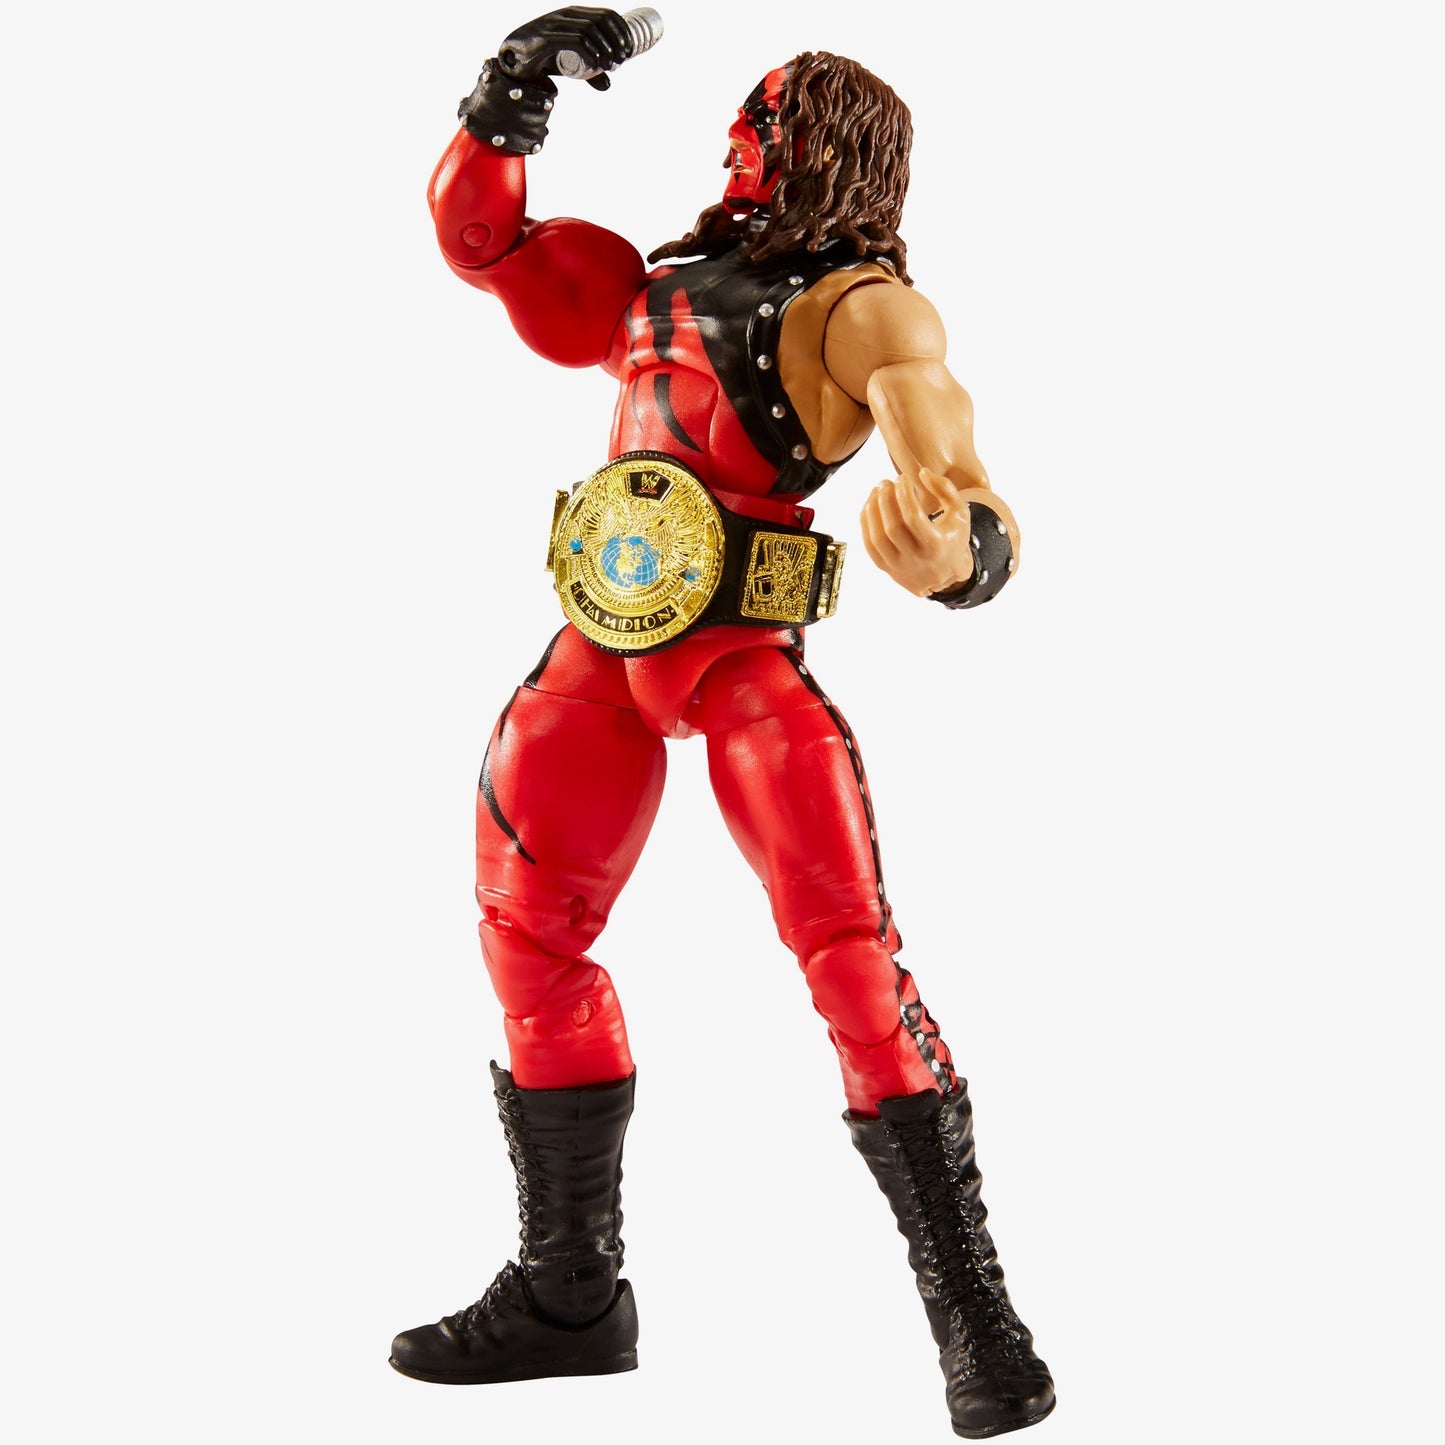 WWE Figurine Championship Collection #35 Kane